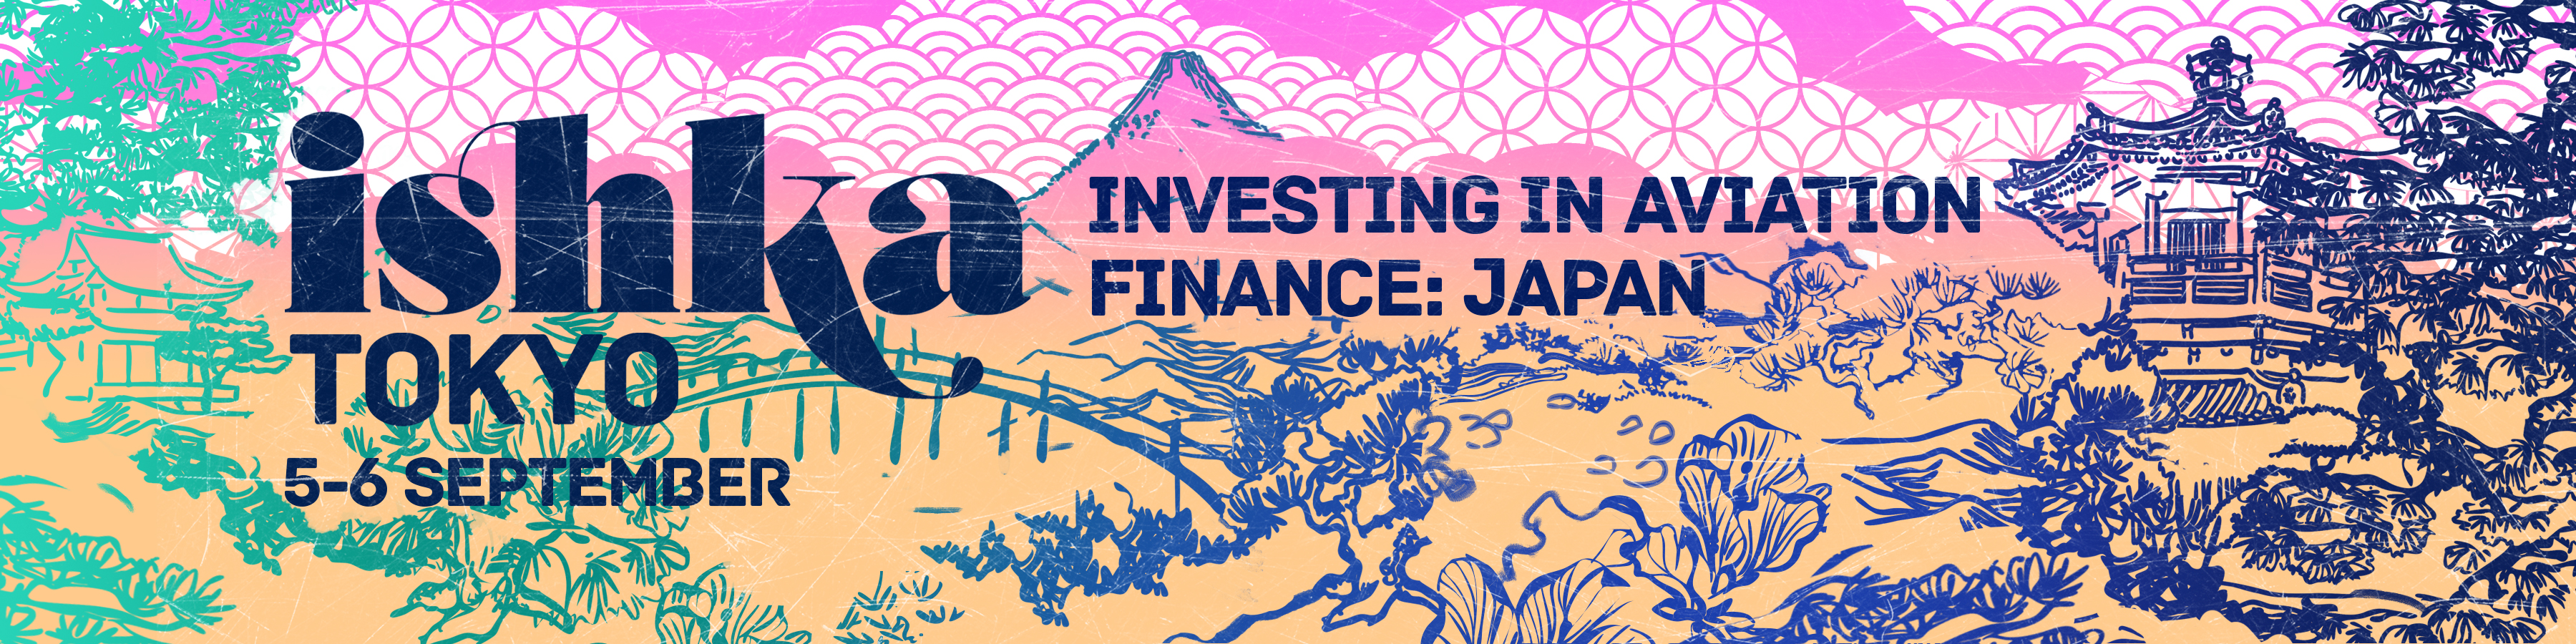 Ishka航空ファイナンス投資：ジャパン | Ishka Investing in Aviation Finance: Japan - Booking